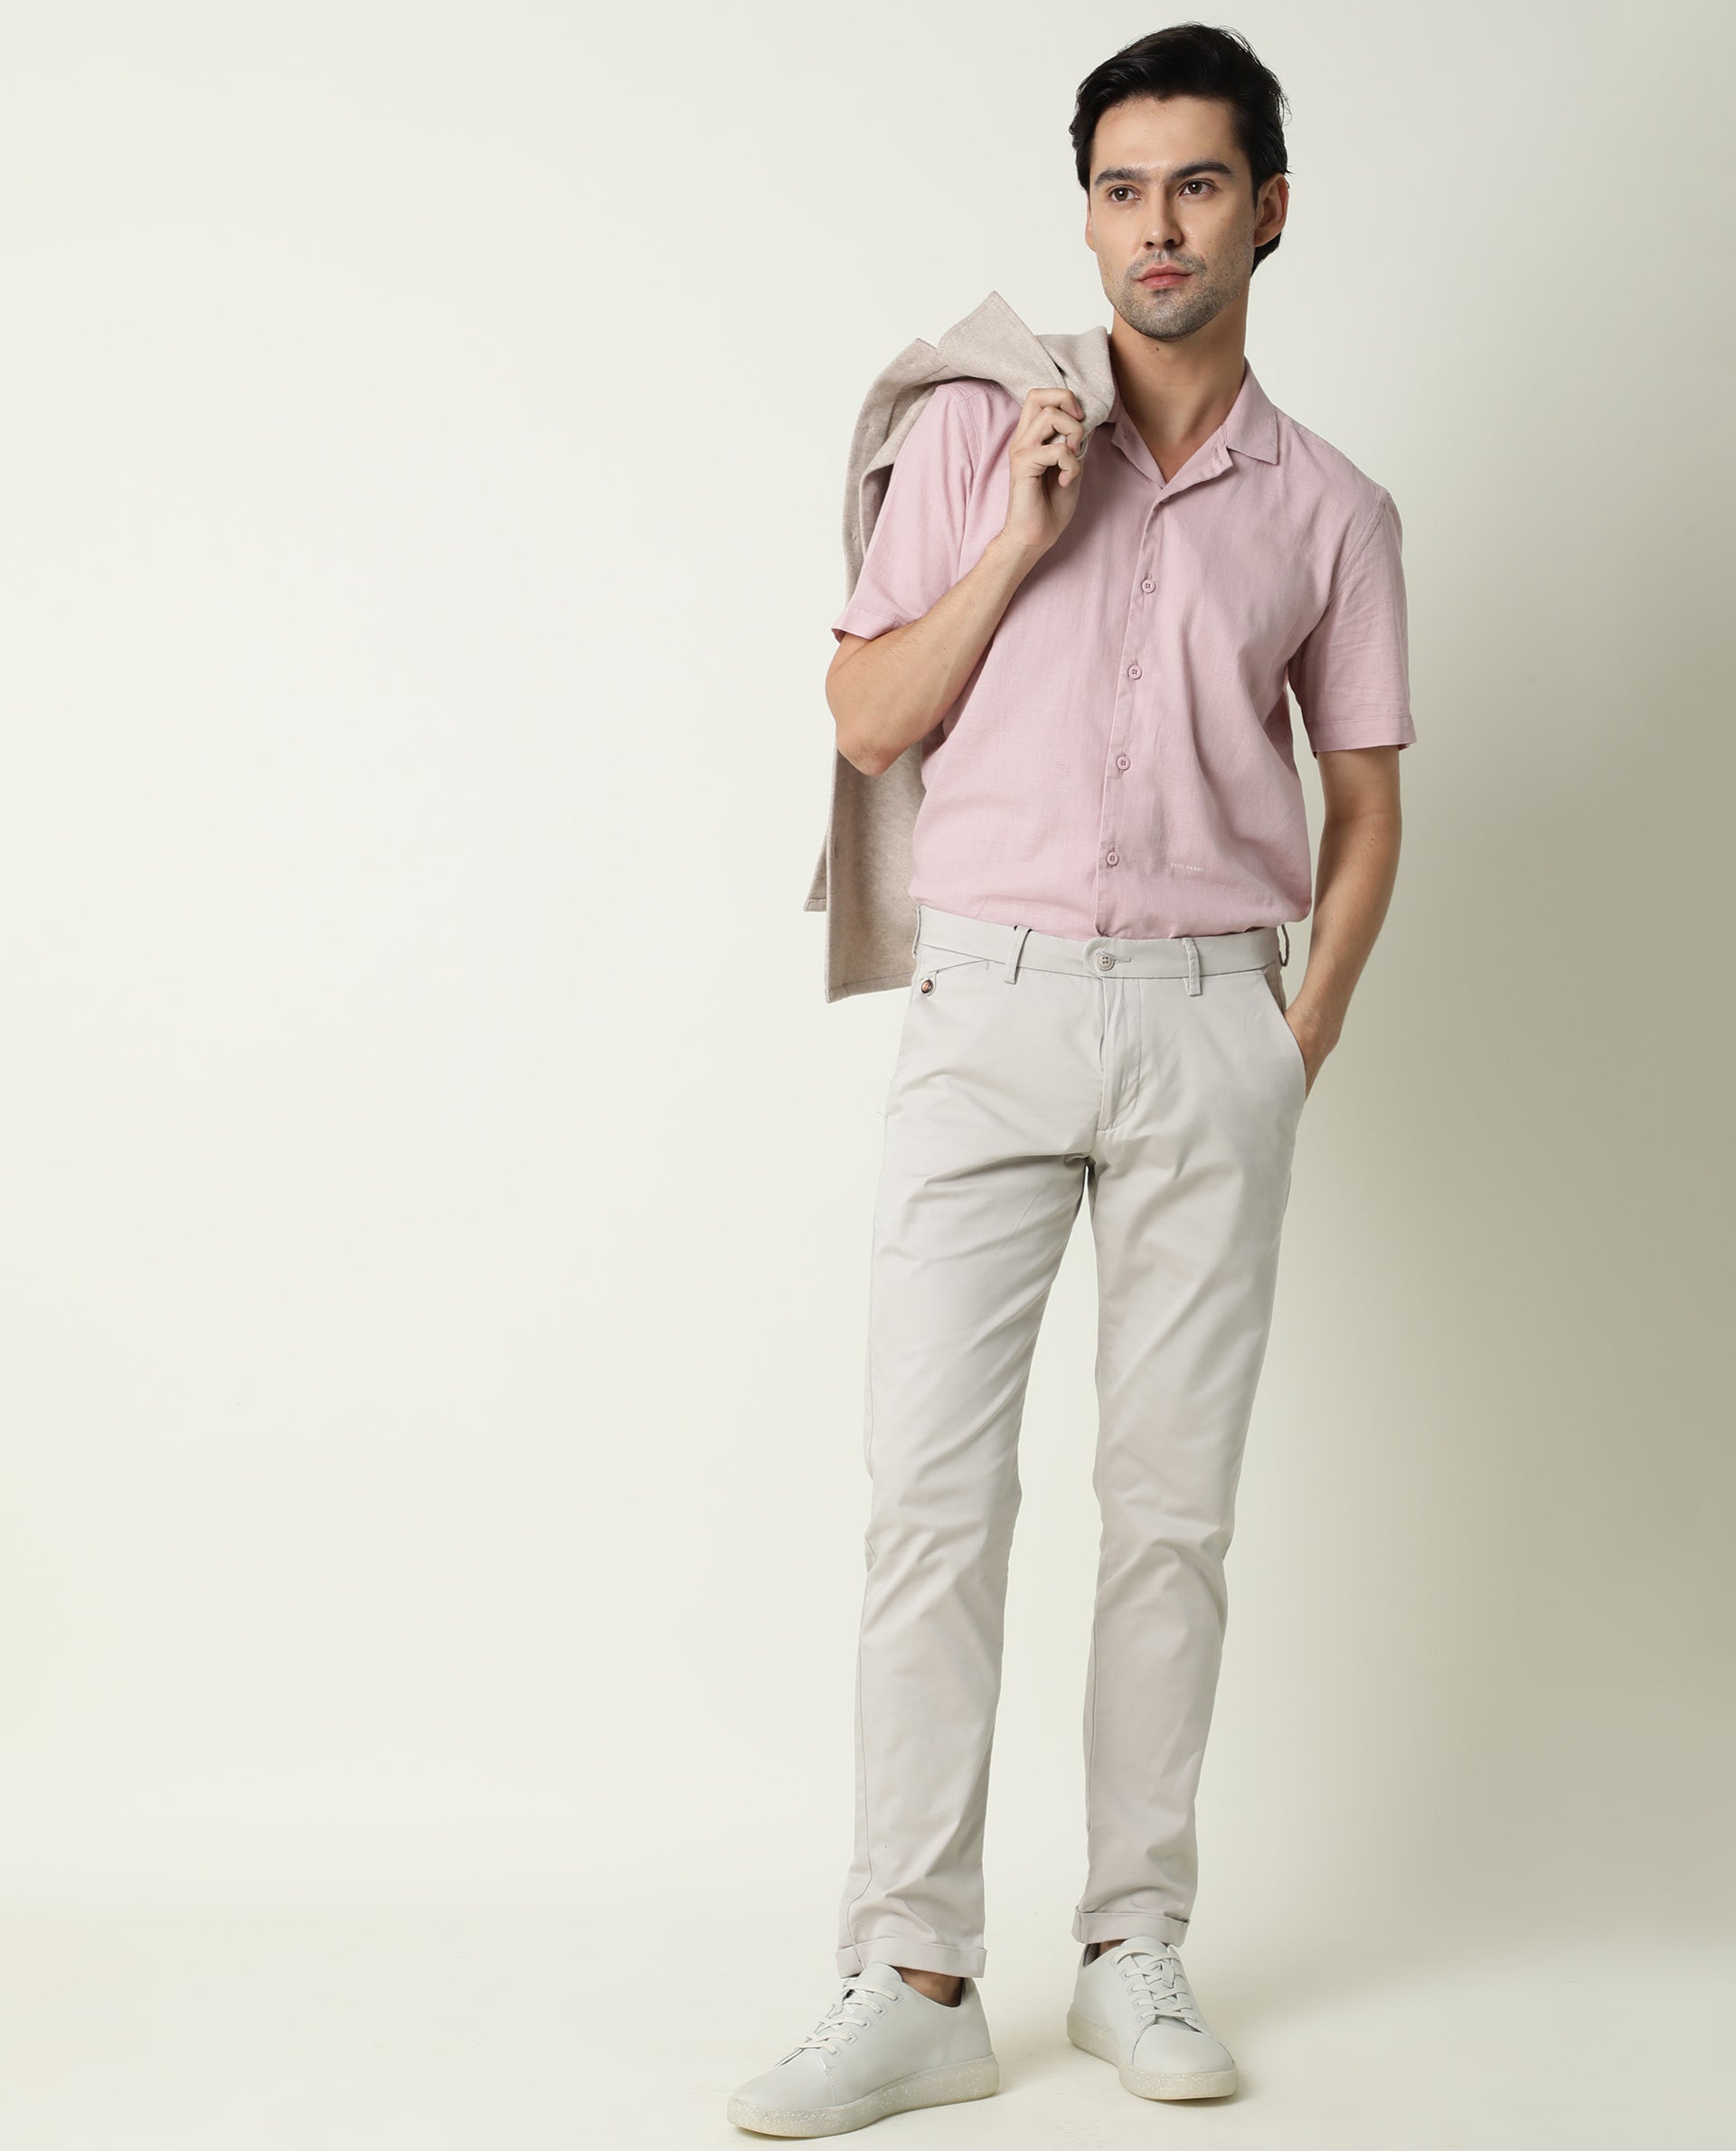 Mens Pink Vertical Striped Linen Long Sleeve Shirt Beige Chinos Beige  Leather Low Top Sneakers  Lookastic